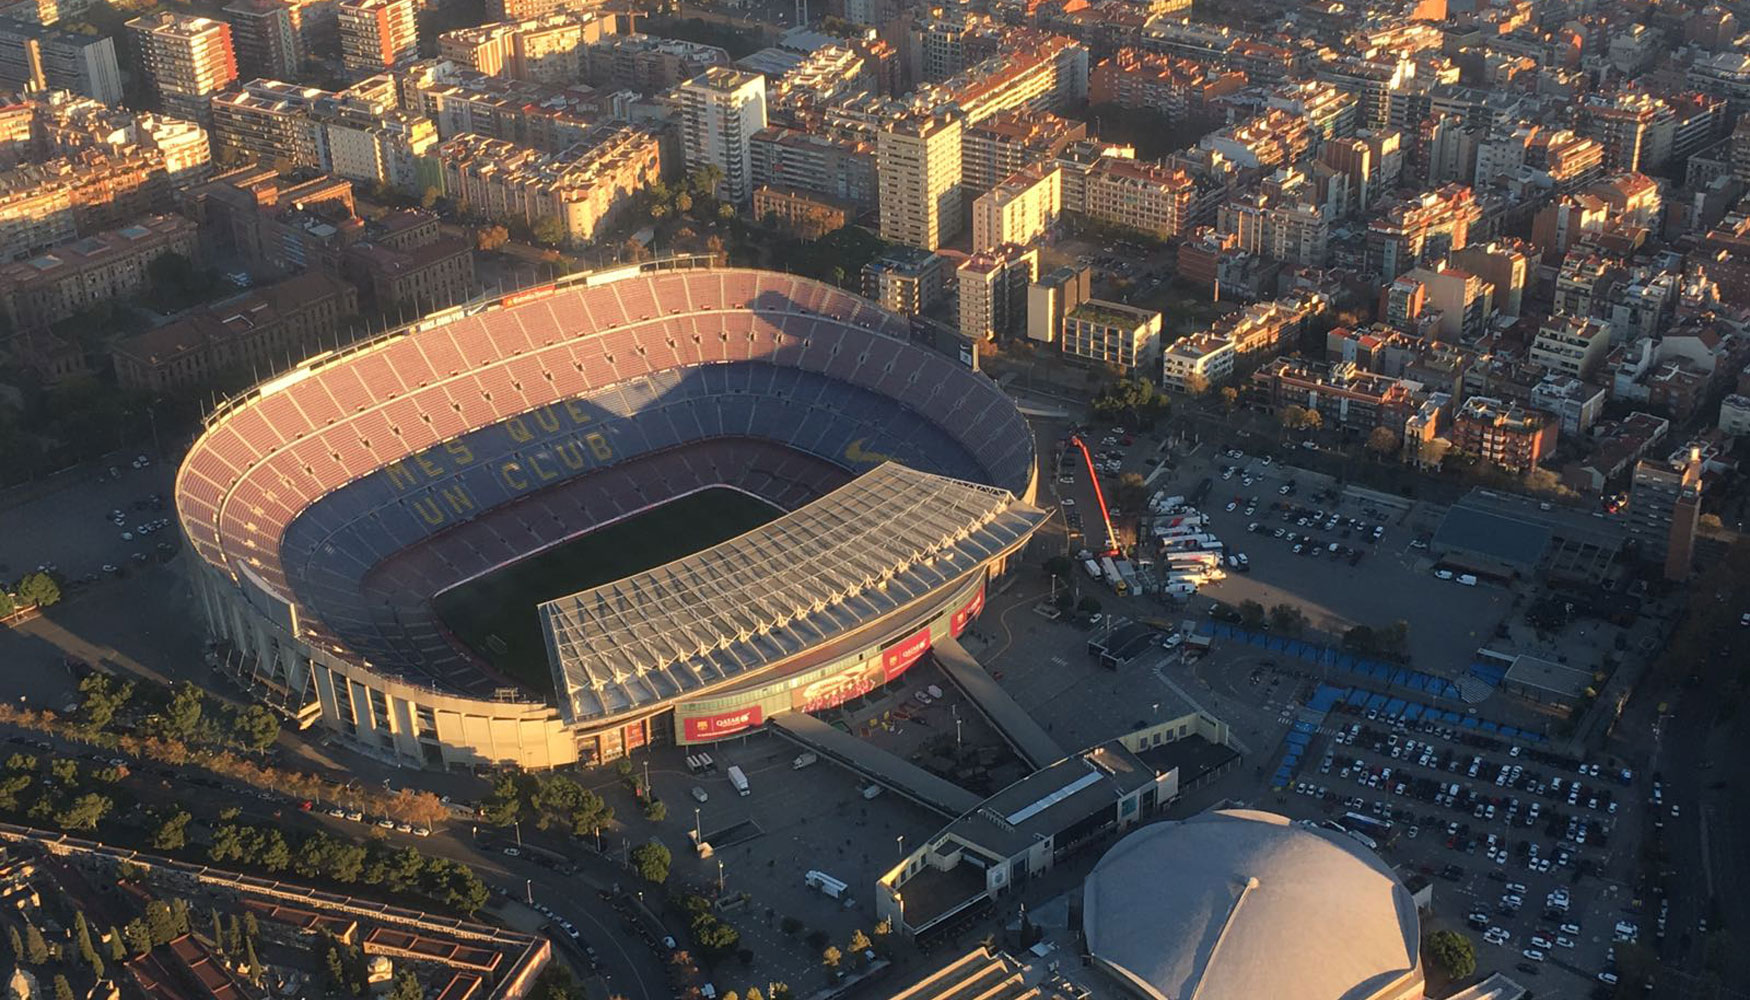 Plano cenital del Camp Nou con la plataforma JLG a la derecha